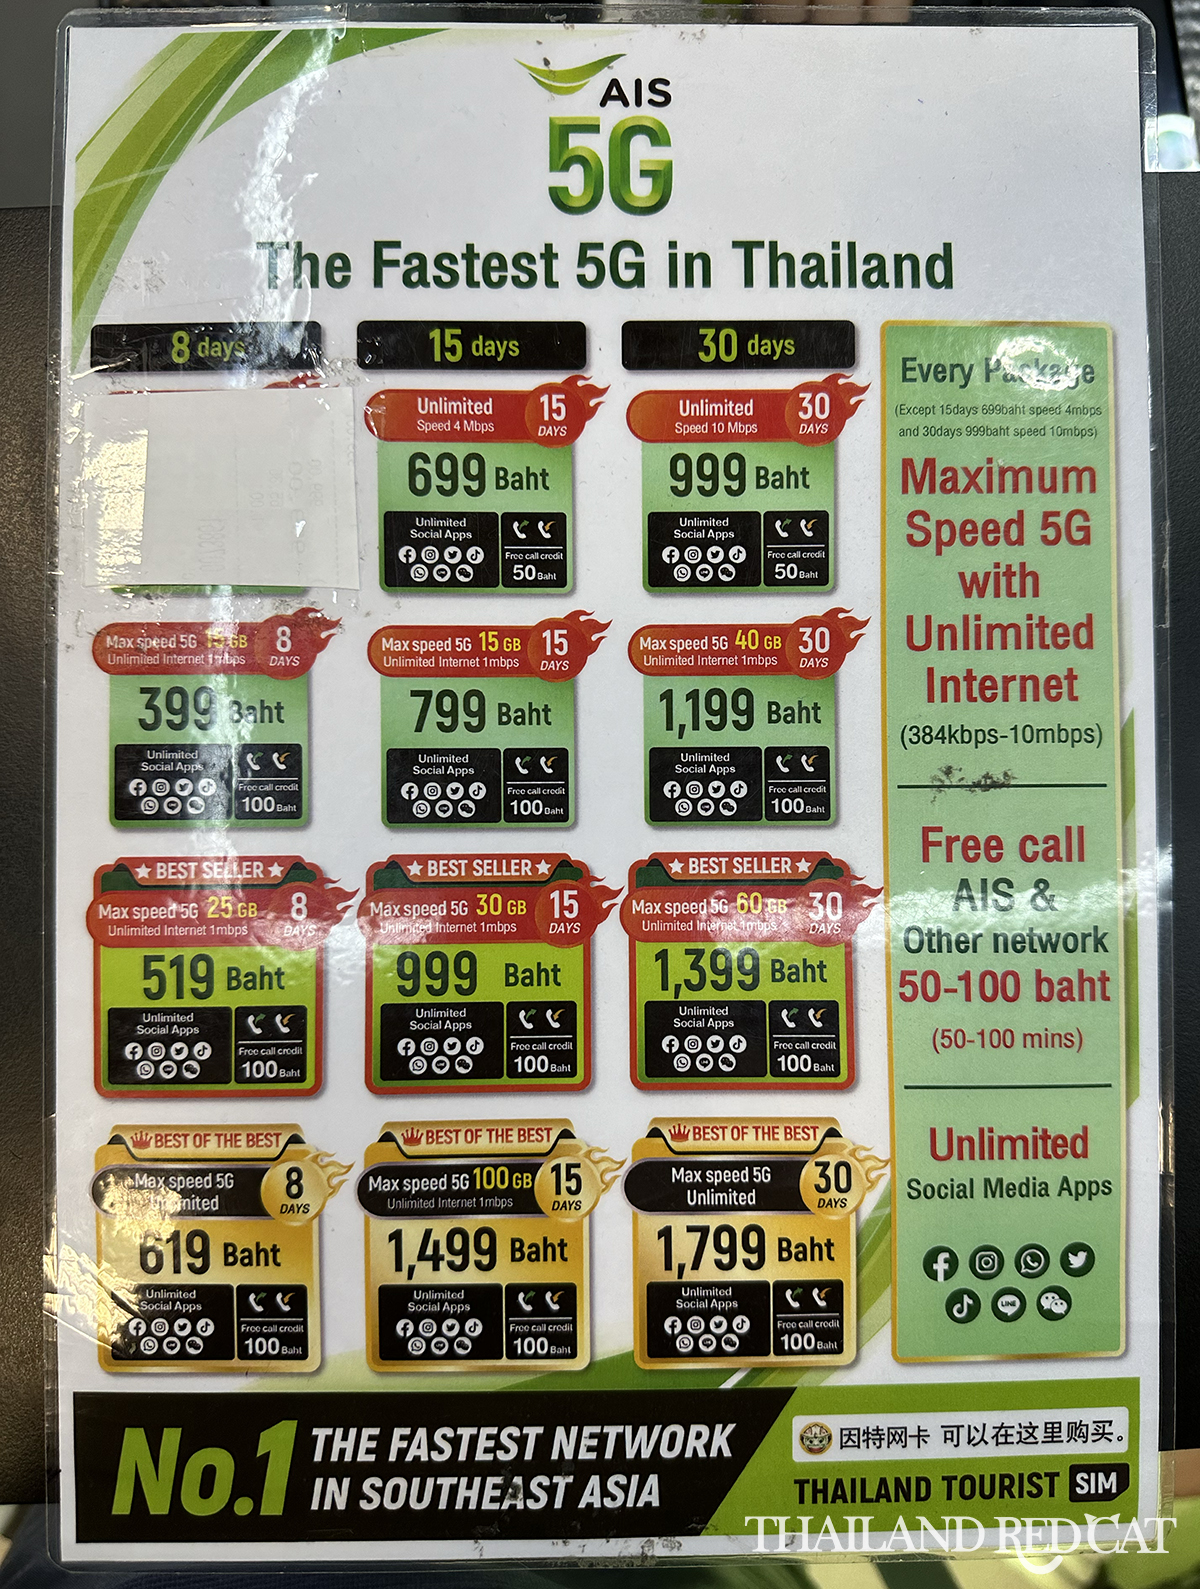 Thailand Tourist SIM Card Prices